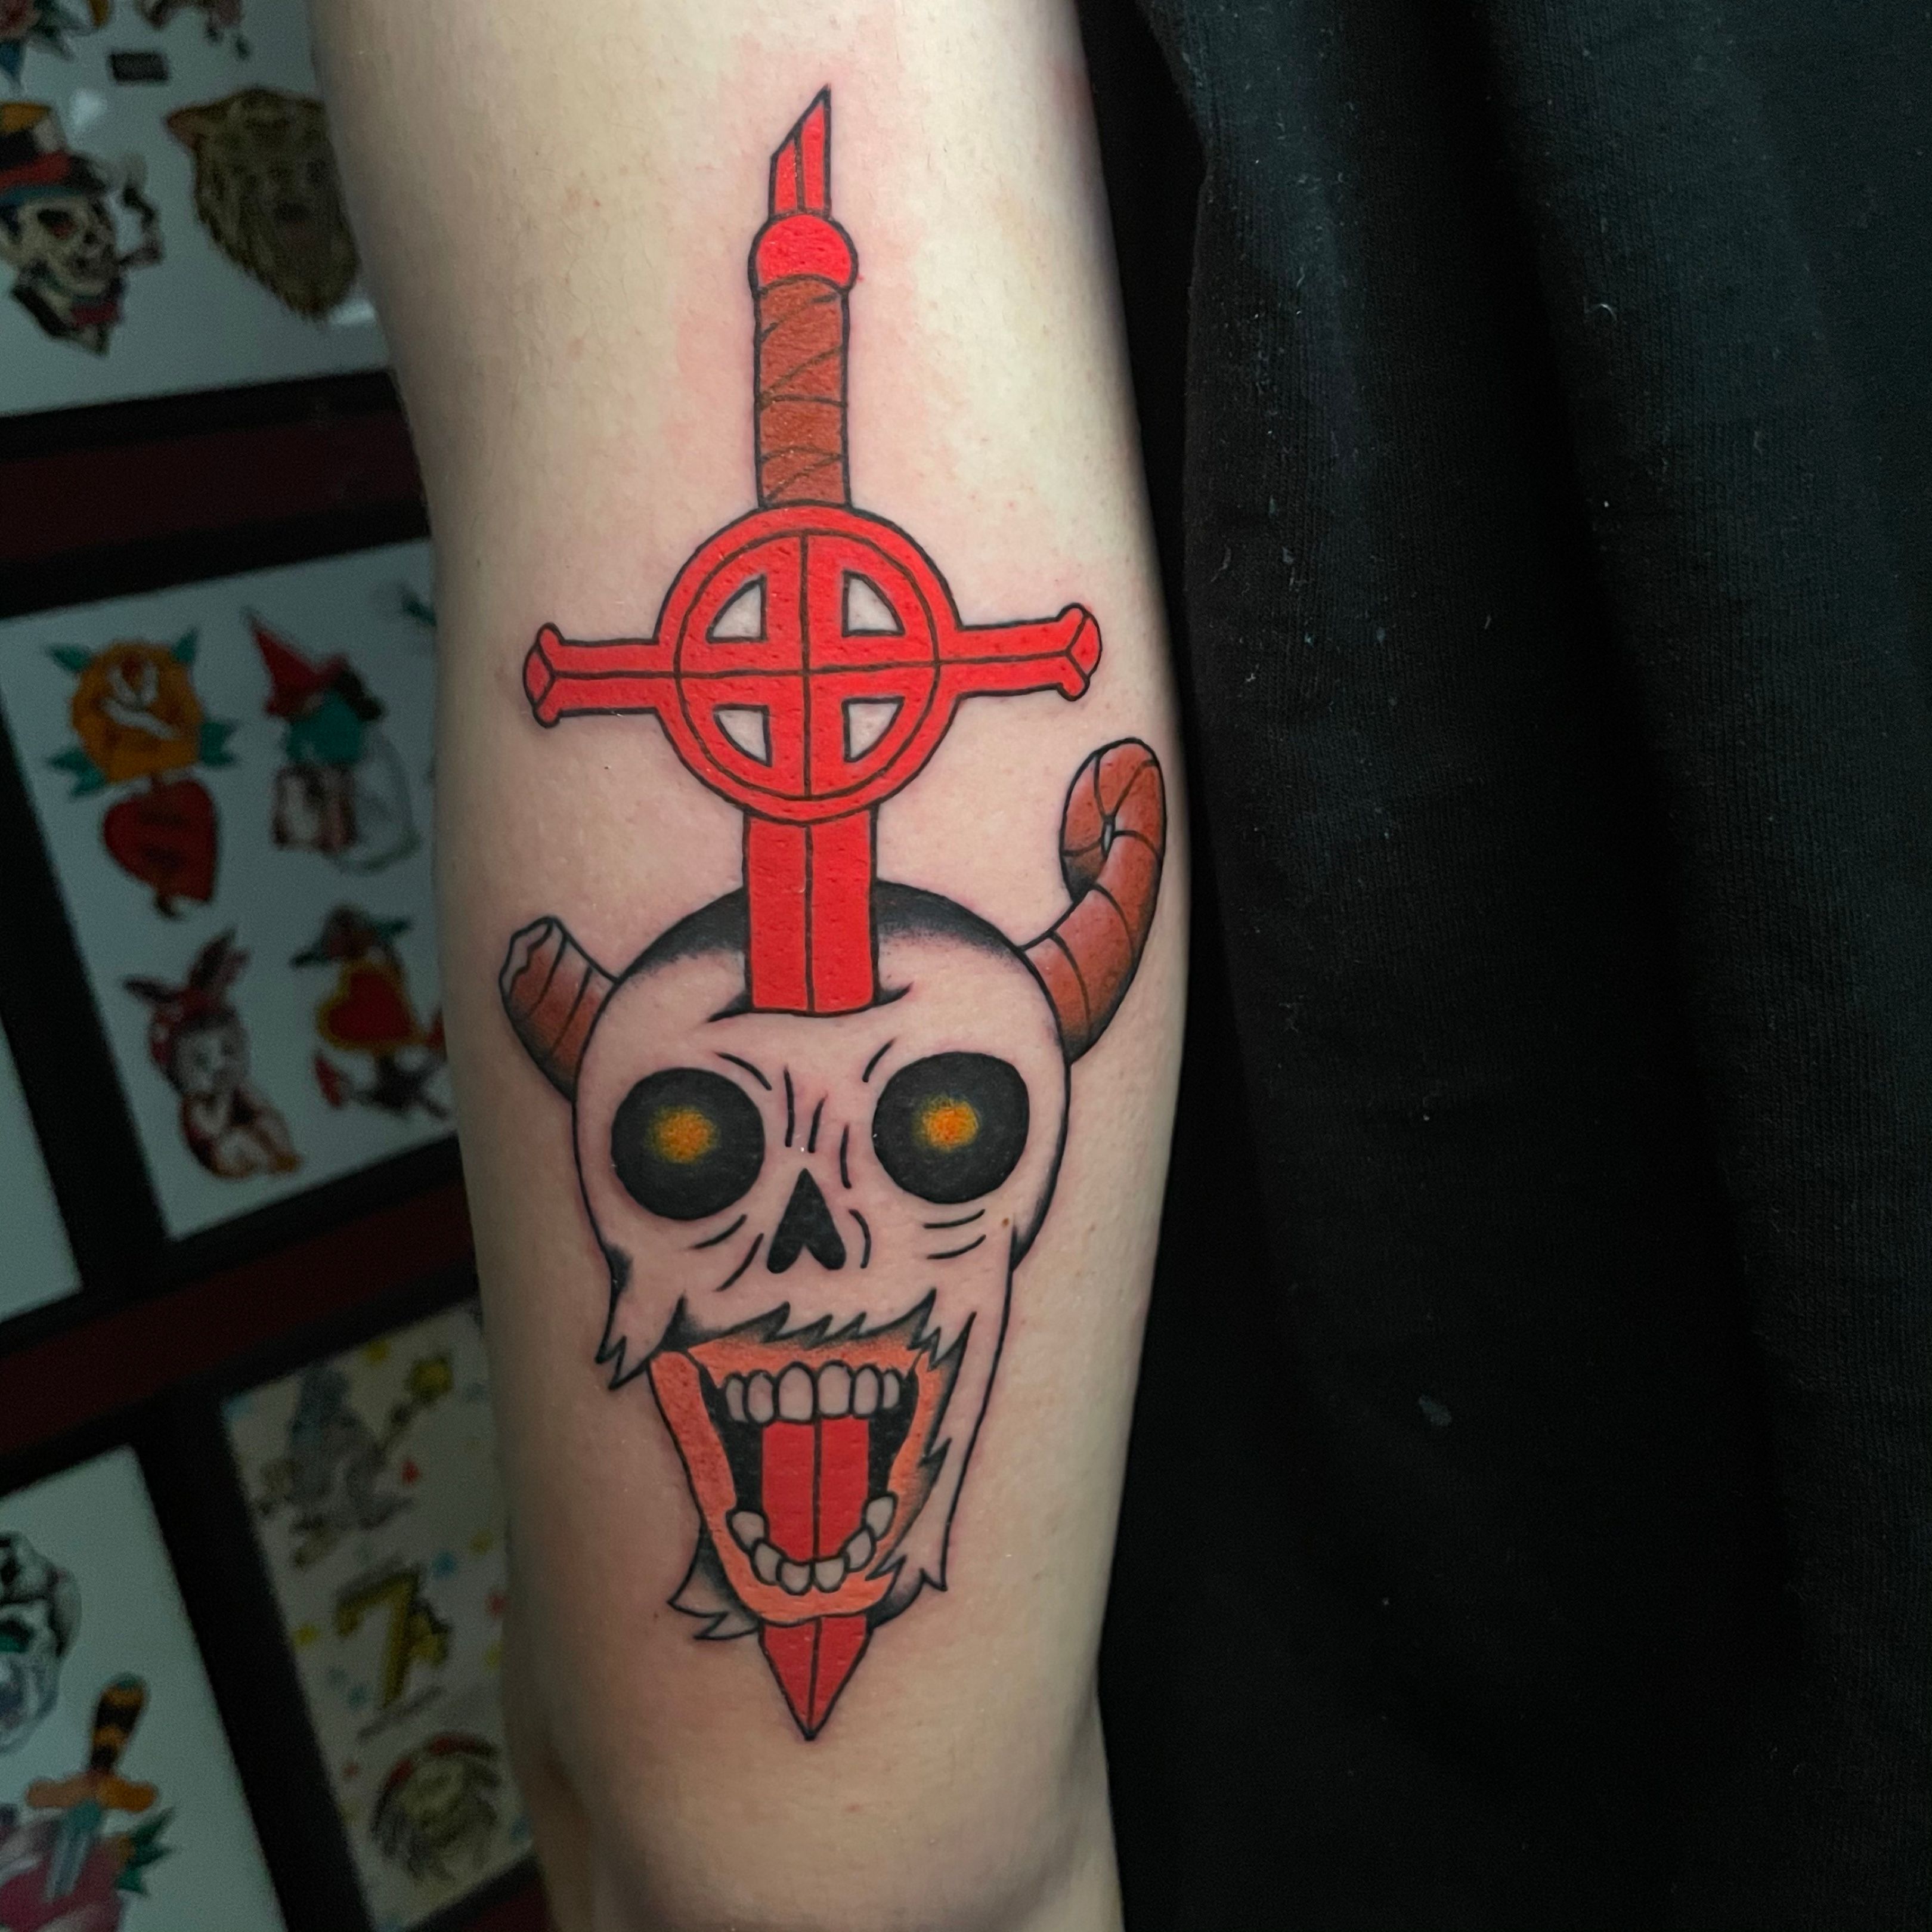 Got the Demon Blood sword tattooed on me today  radventuretime